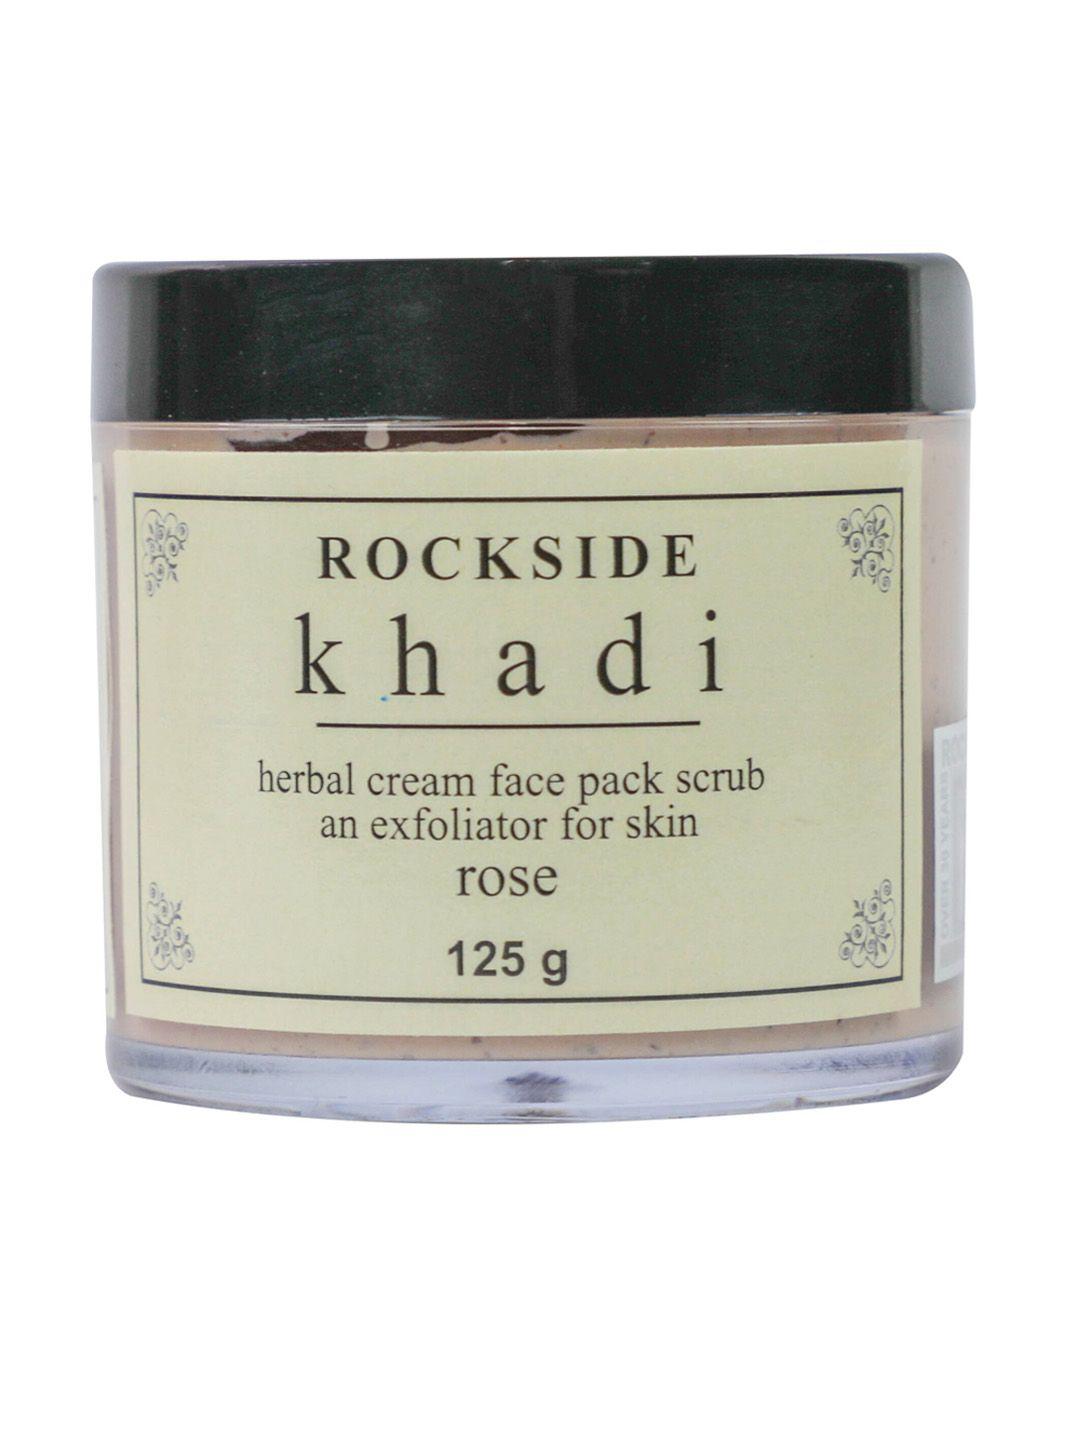 rockside-khadi-herbal-cream-face-pack-scrub-rose---125g